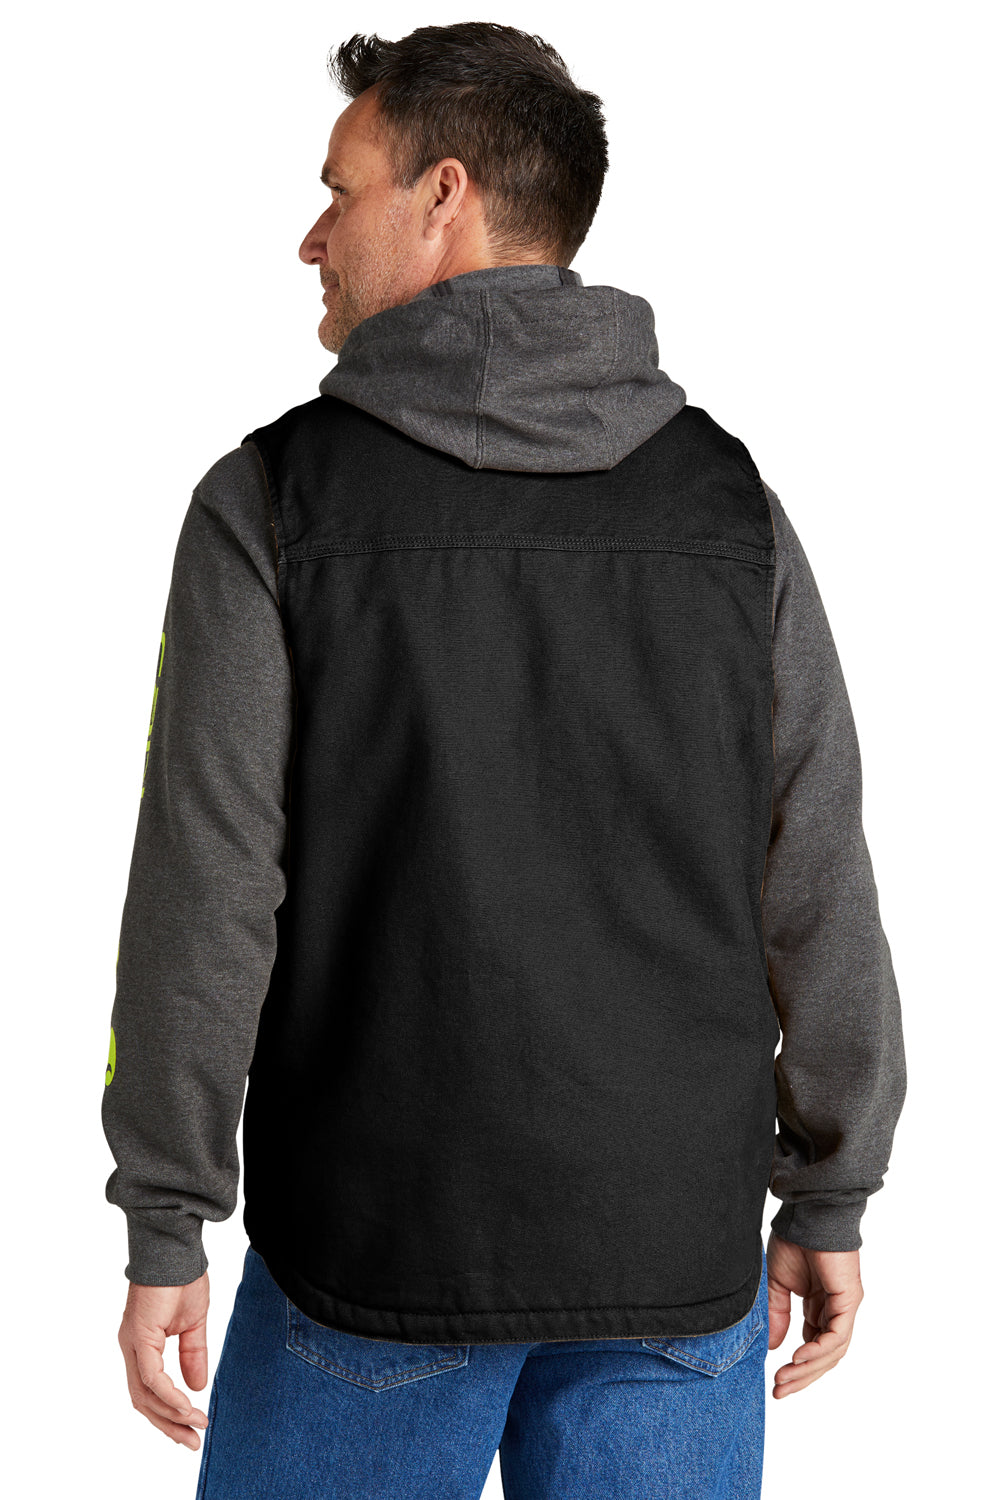 Carhartt CT104277 Mens Sherpa Lined Mock Neck Full Zip Vest Black Model Back